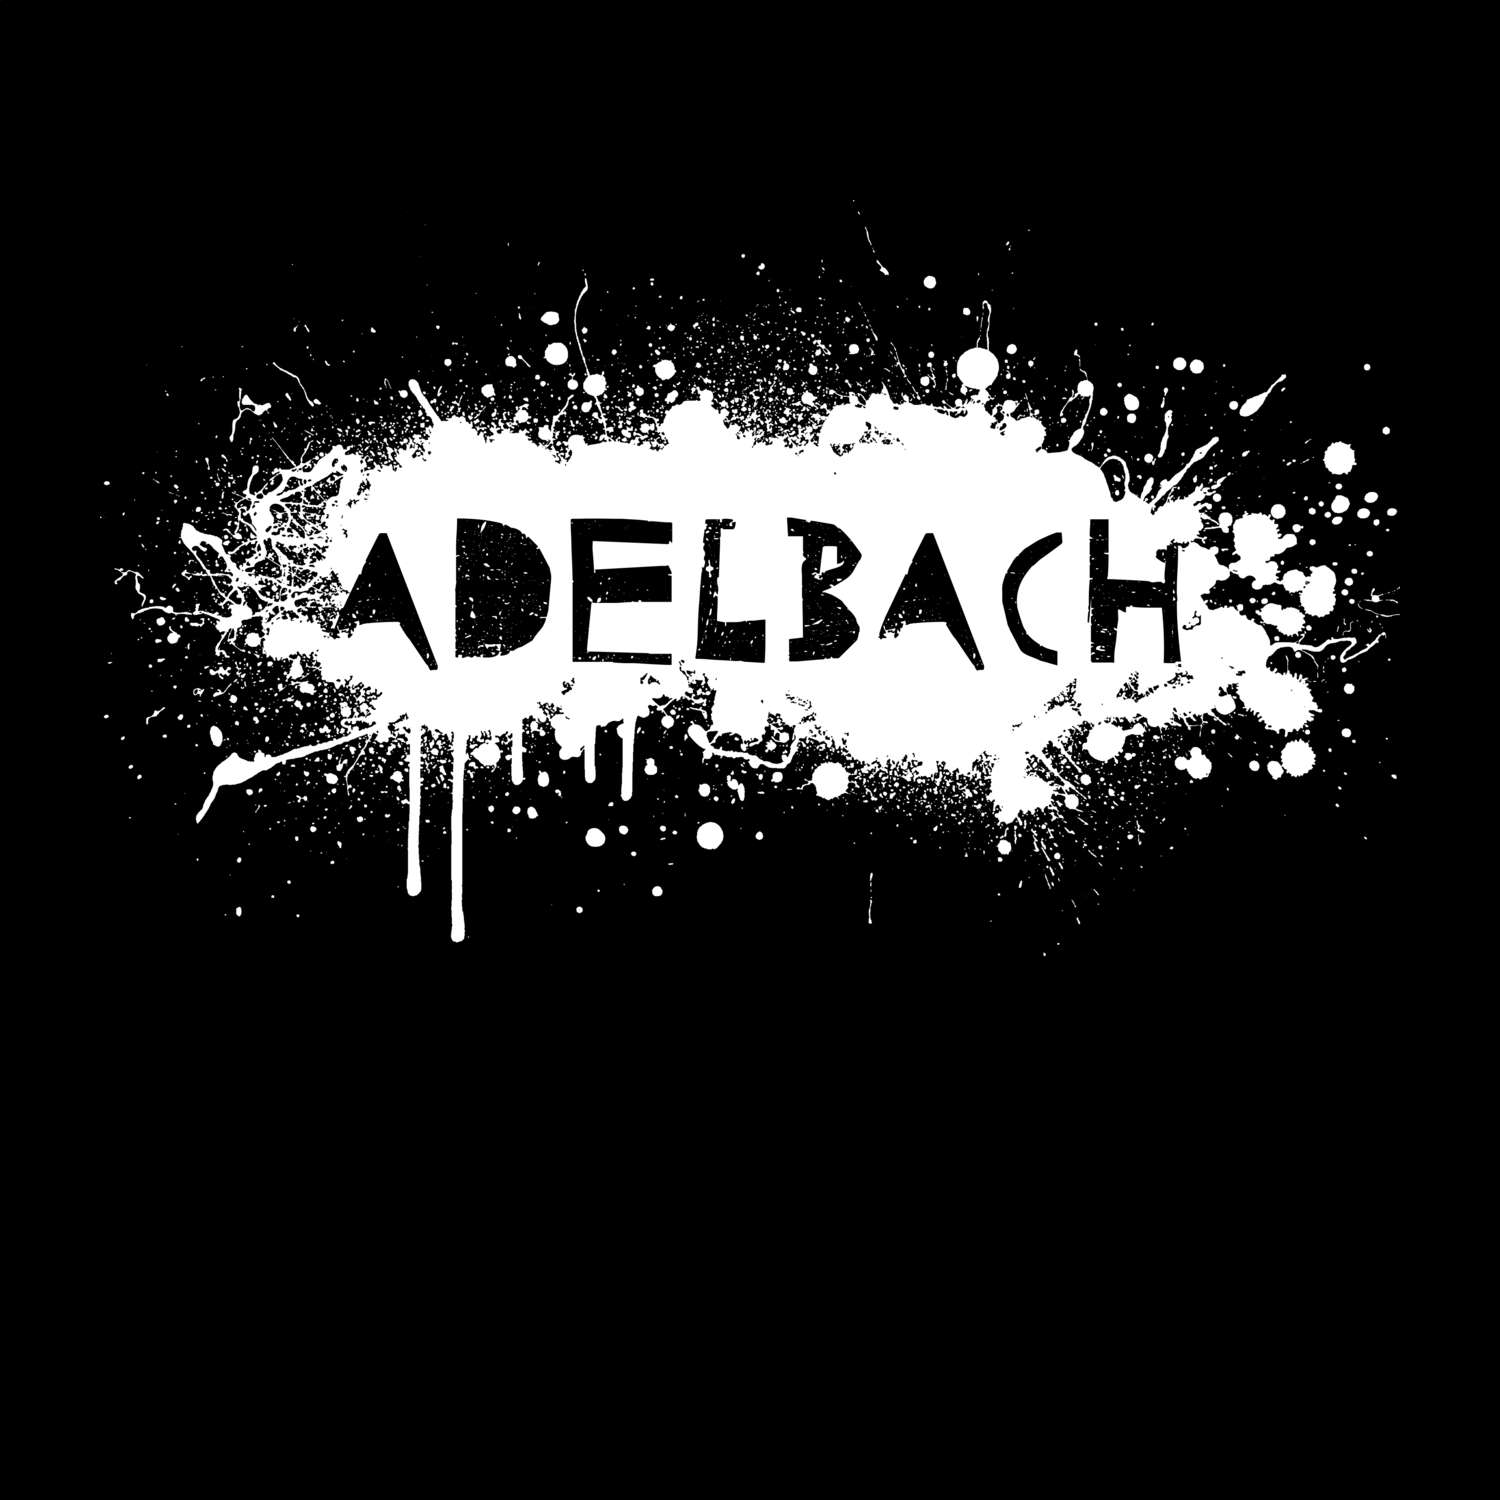 Adelbach T-Shirt »Paint Splash Punk«